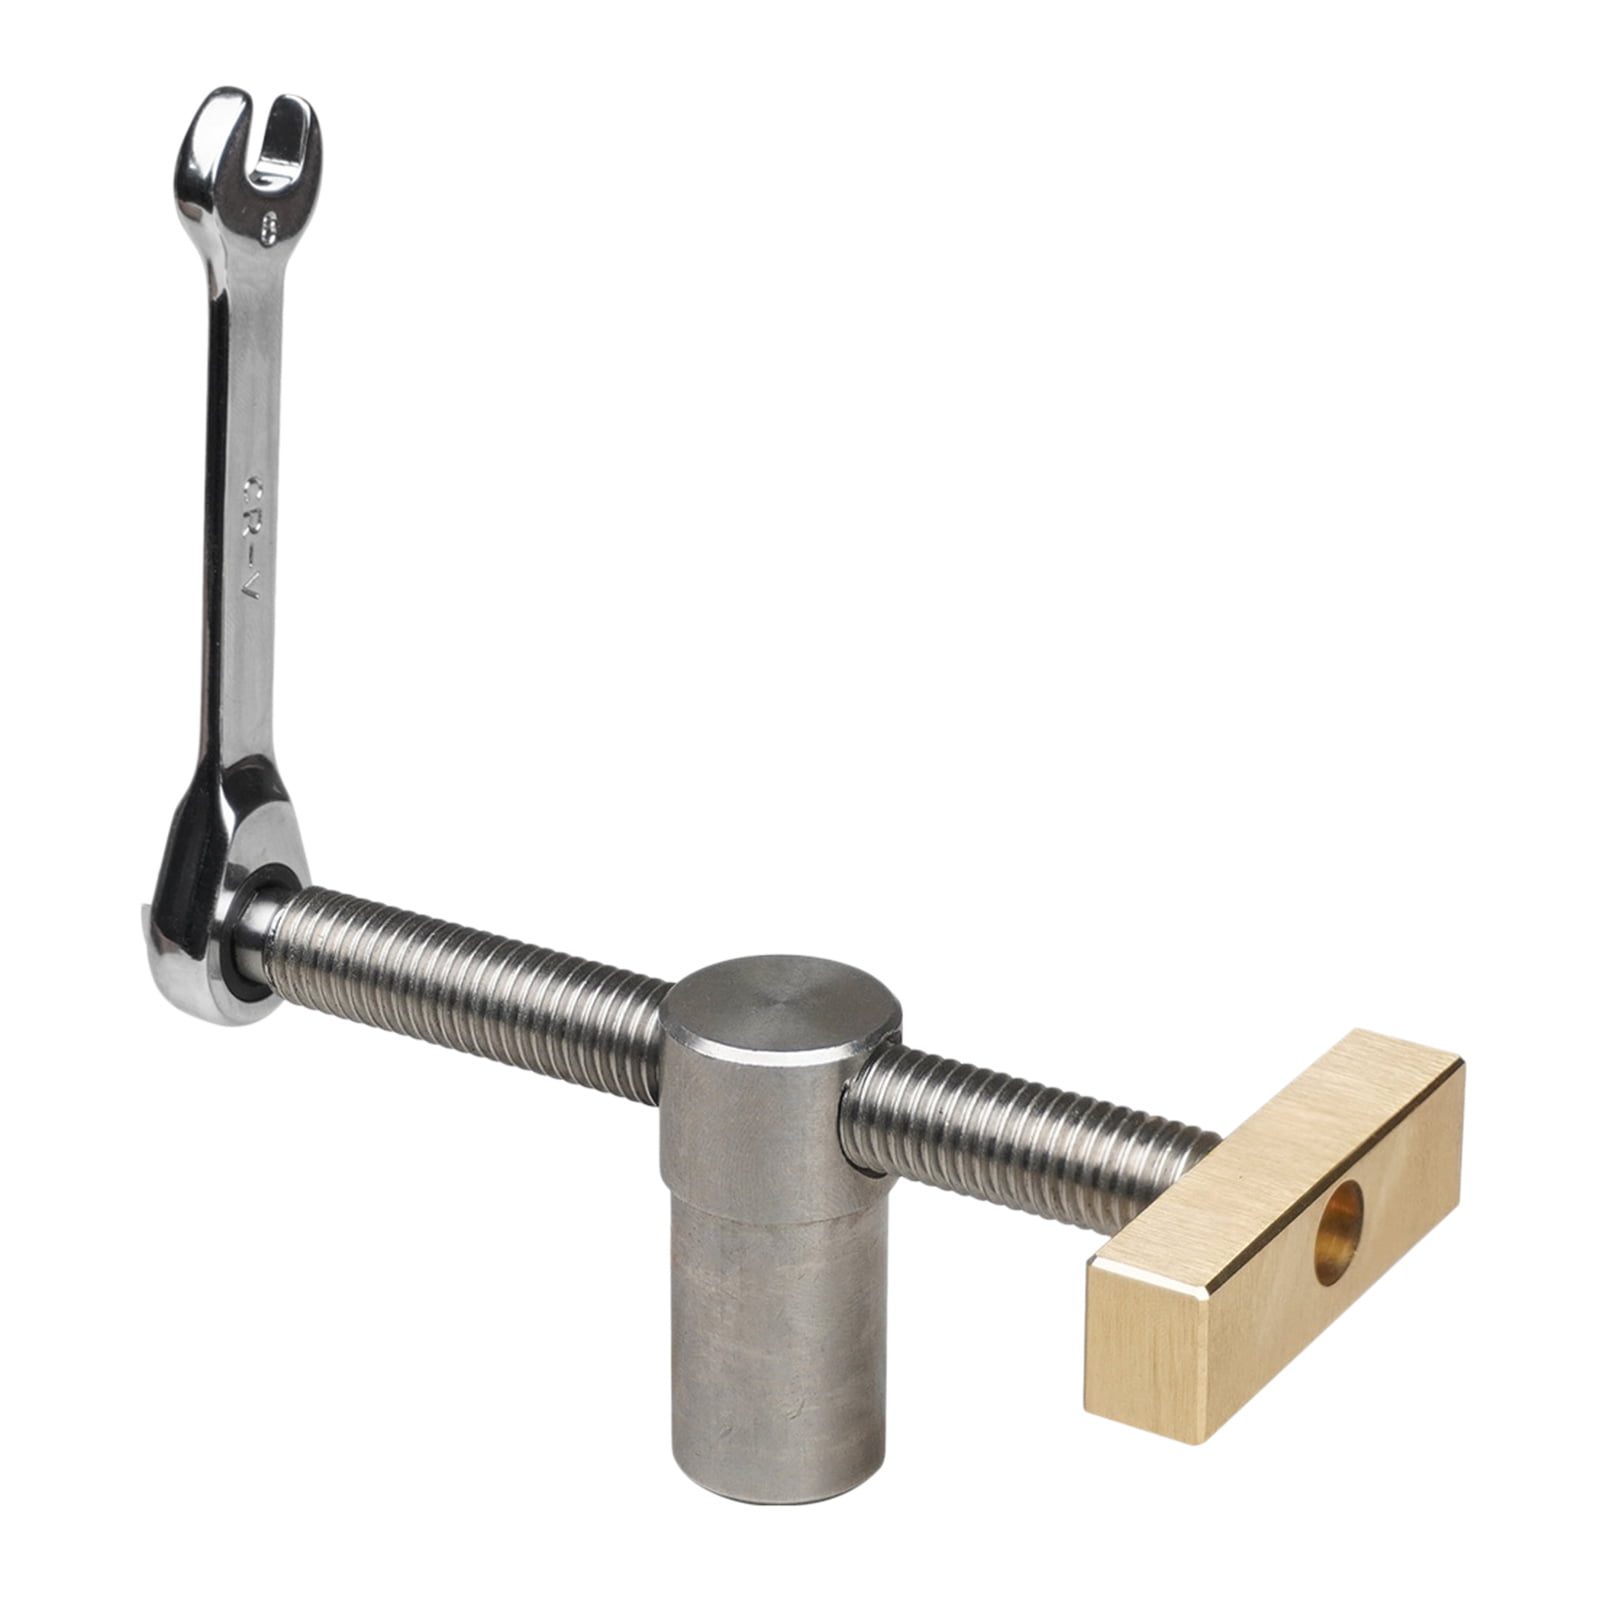 1 Set Bench Clamp Mini Drill Press Vice Vise DIY Model Making Building Tools 